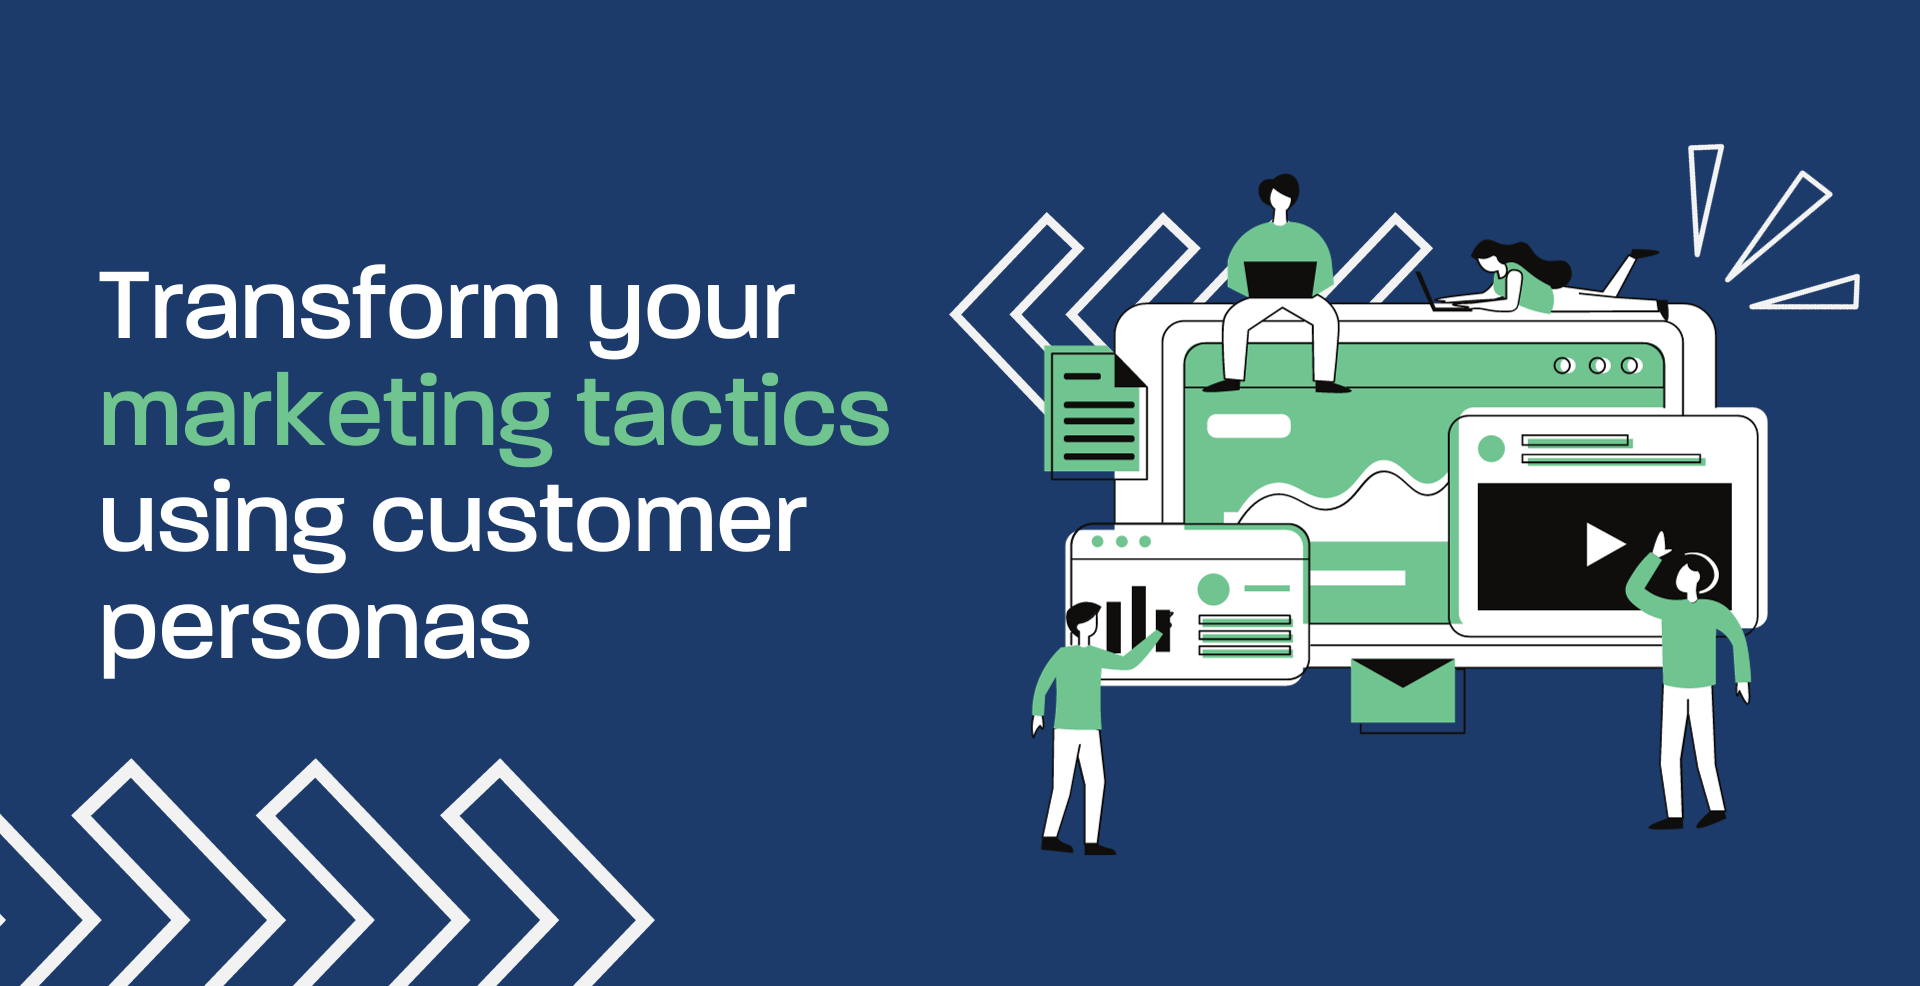 Transform your marketing tactics using customer personas